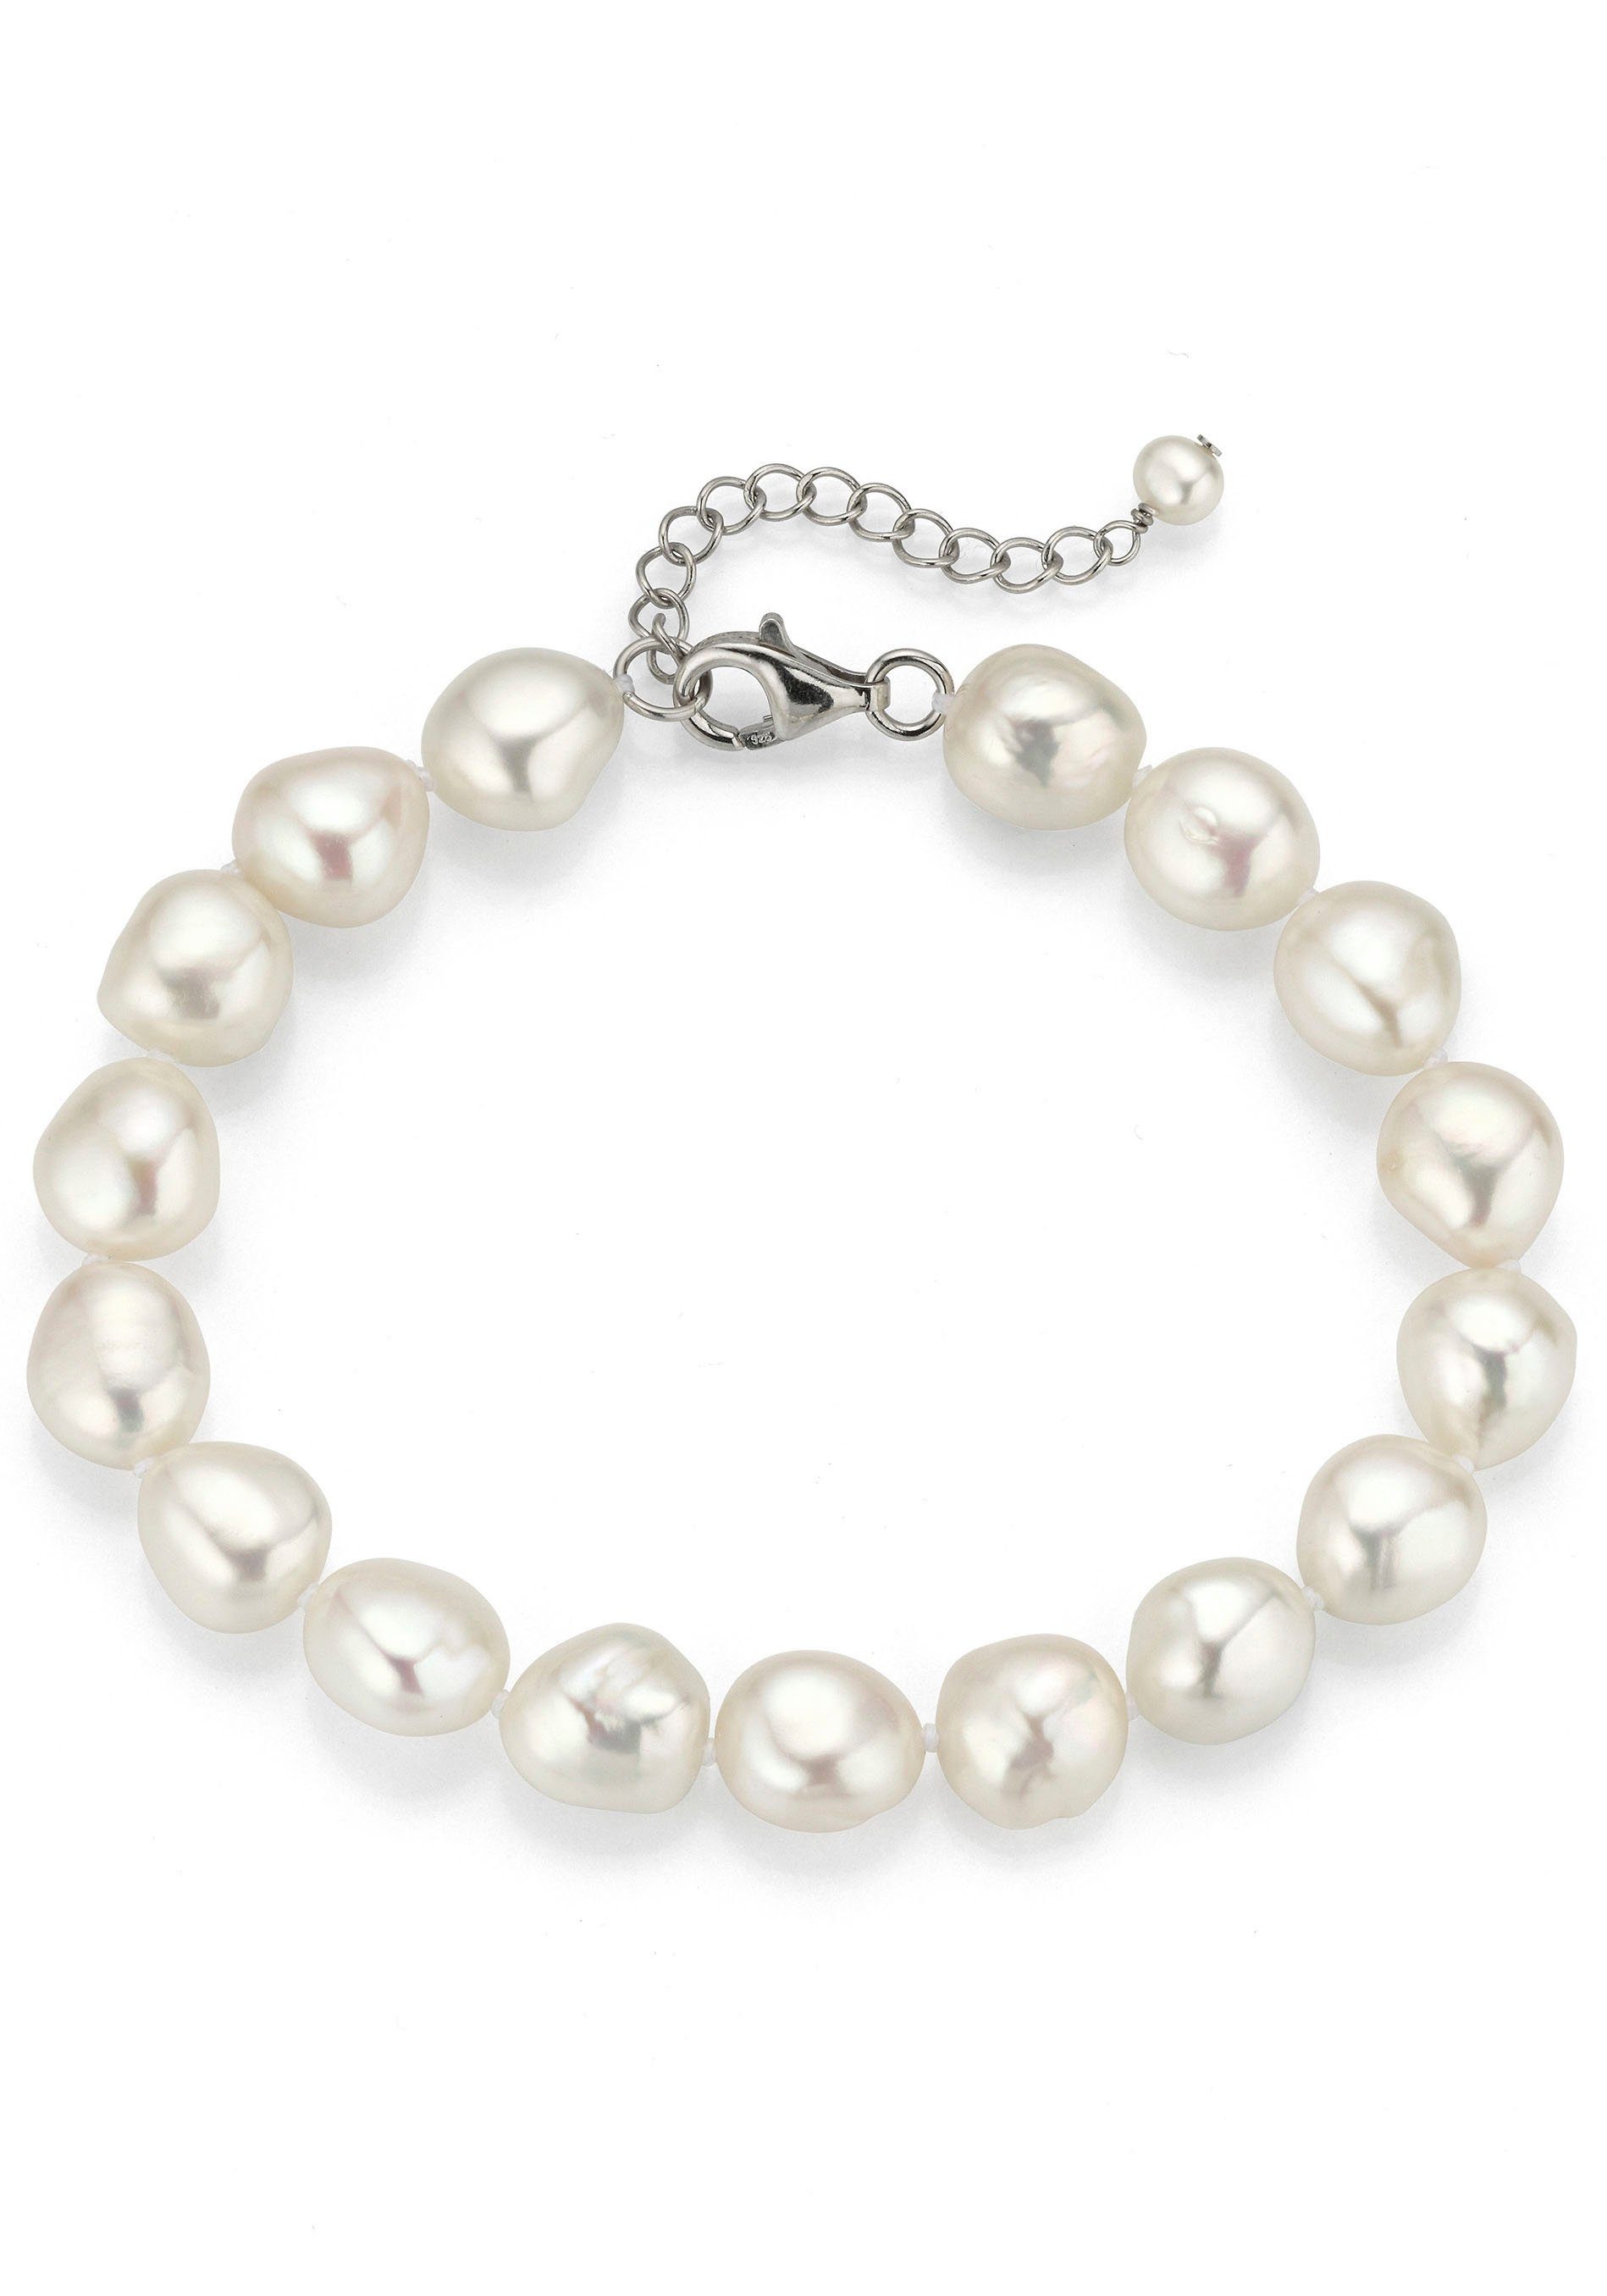 Firetti Perlenarmband Schmuck Geschenk Armschmuck Armkette Perle, zu Kleid,  Shirt, Jeans, Sneaker! Anlass Geburtstag Weihnachten, Schimmernde Perlen  reihen sich zu diesem Schmuckstück aneinander | Perlenarmbänder